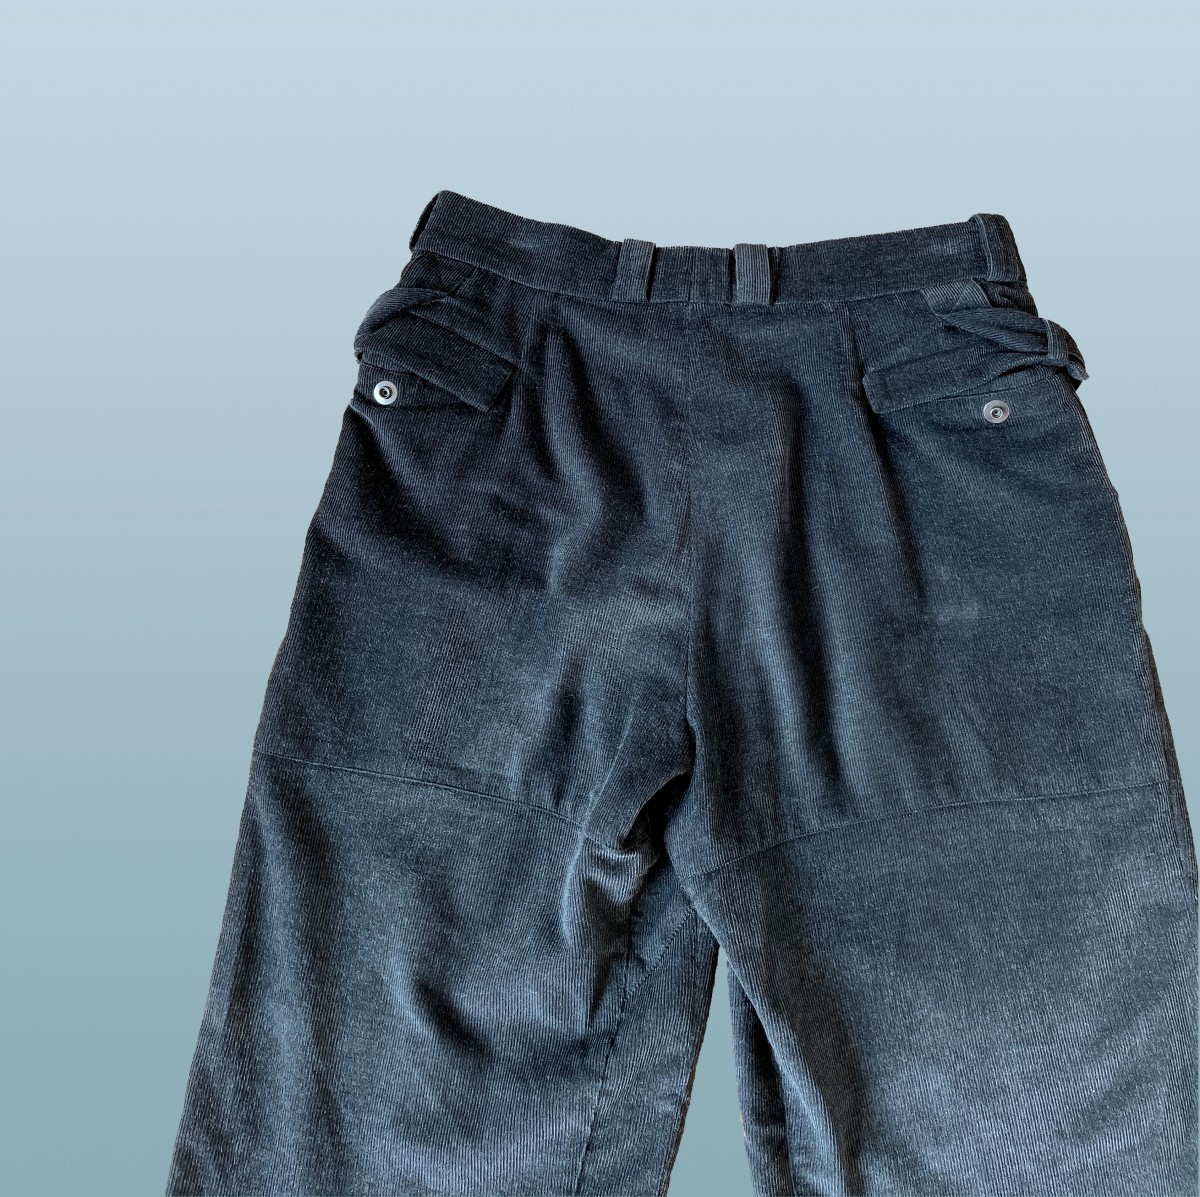 Yann Treated Corduroy pants (FW18) - 5